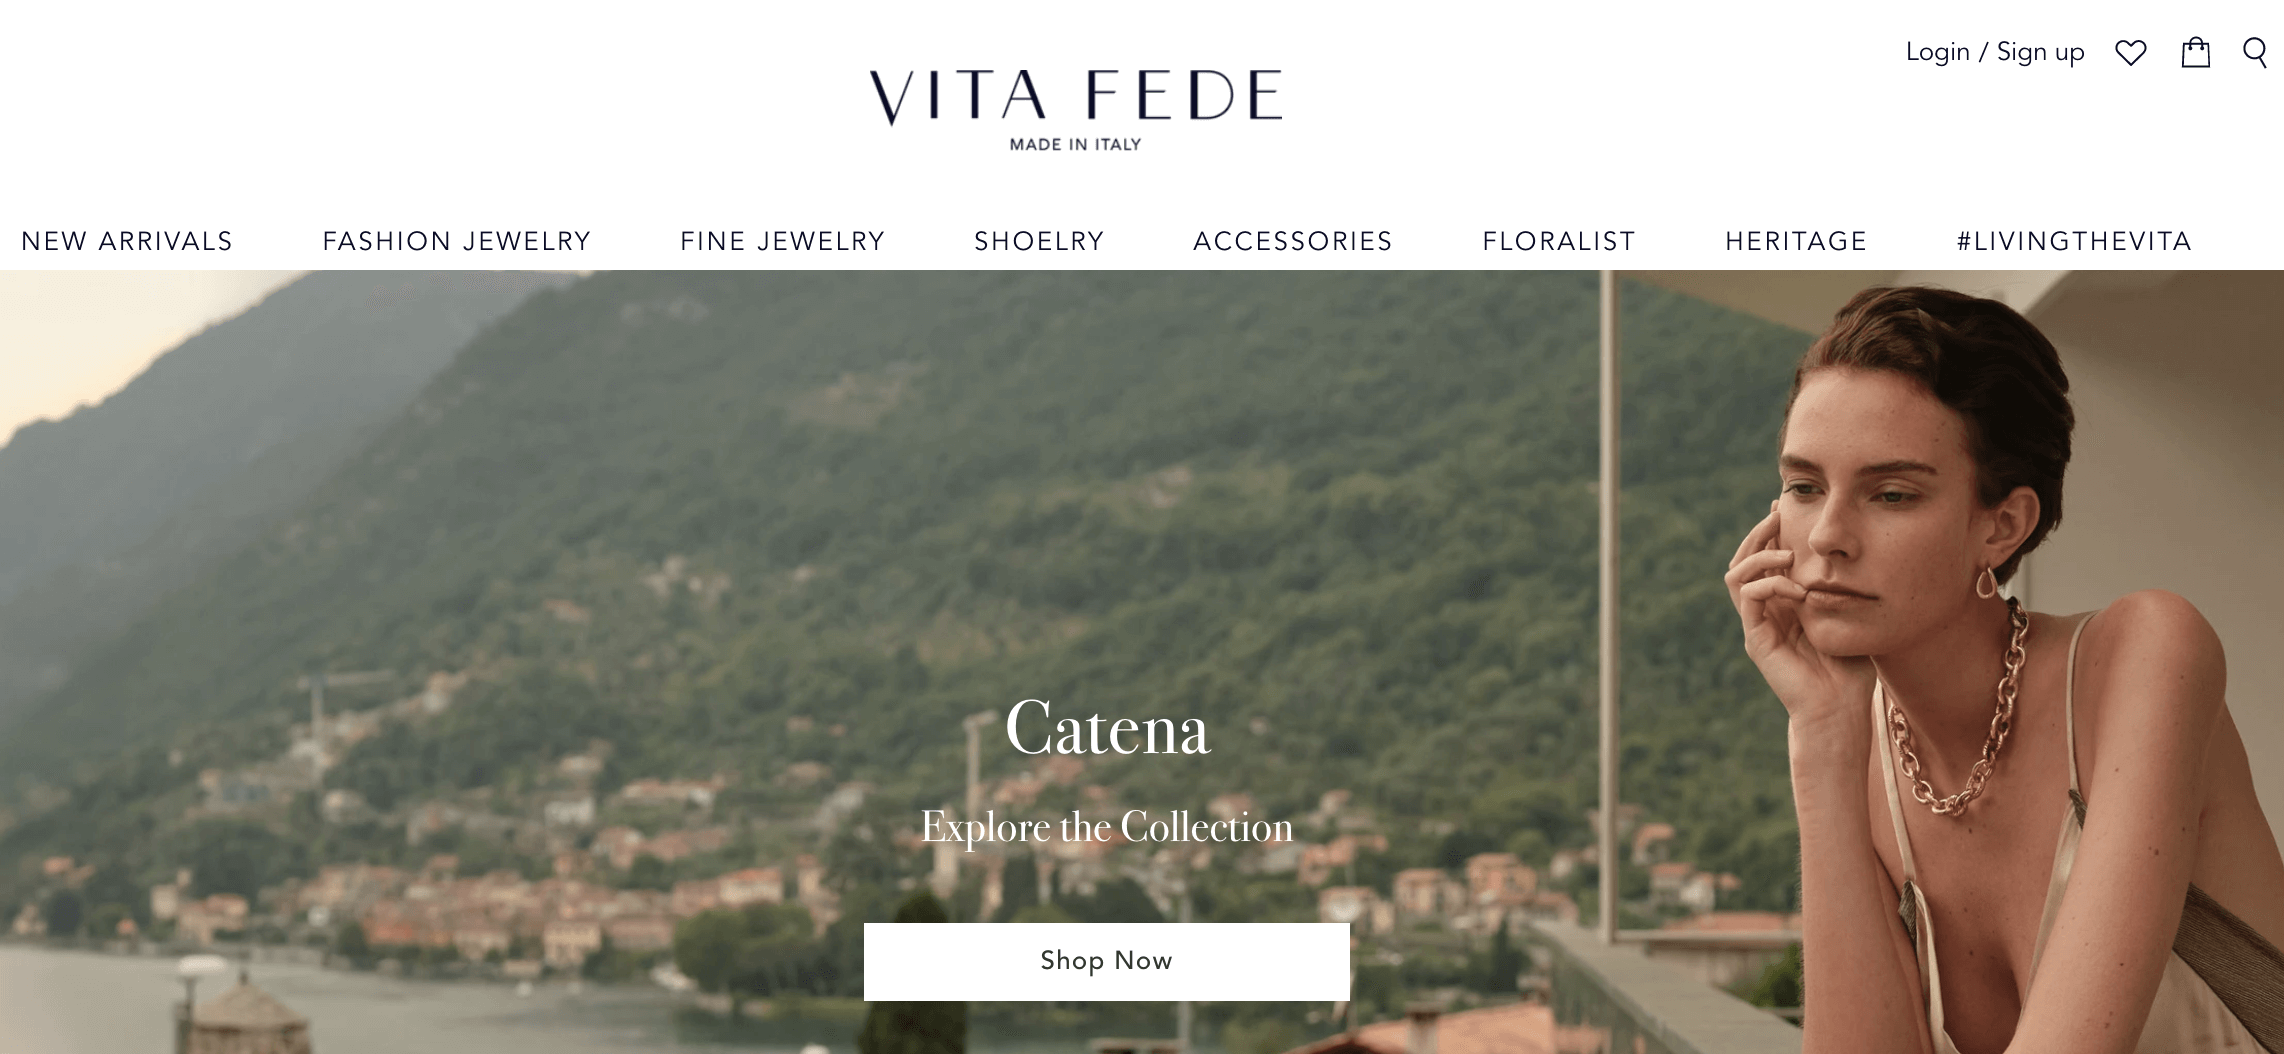 vitafede官网 vita fede 中文官网-在意大利手工制作,在纽约市设计